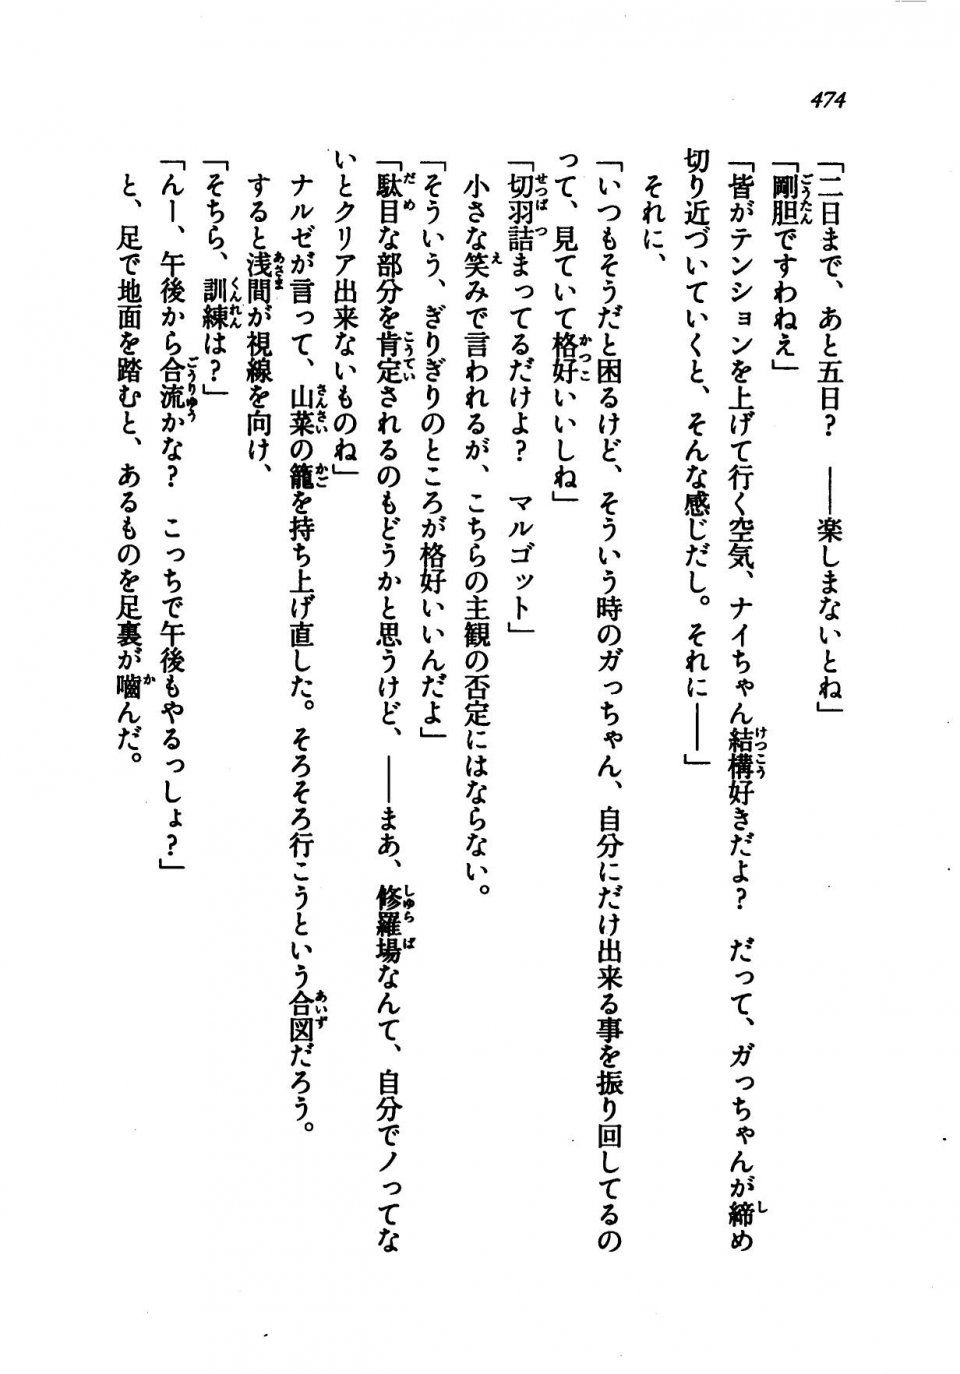 Kyoukai Senjou no Horizon LN Vol 21(8C) Part 1 - Photo #473